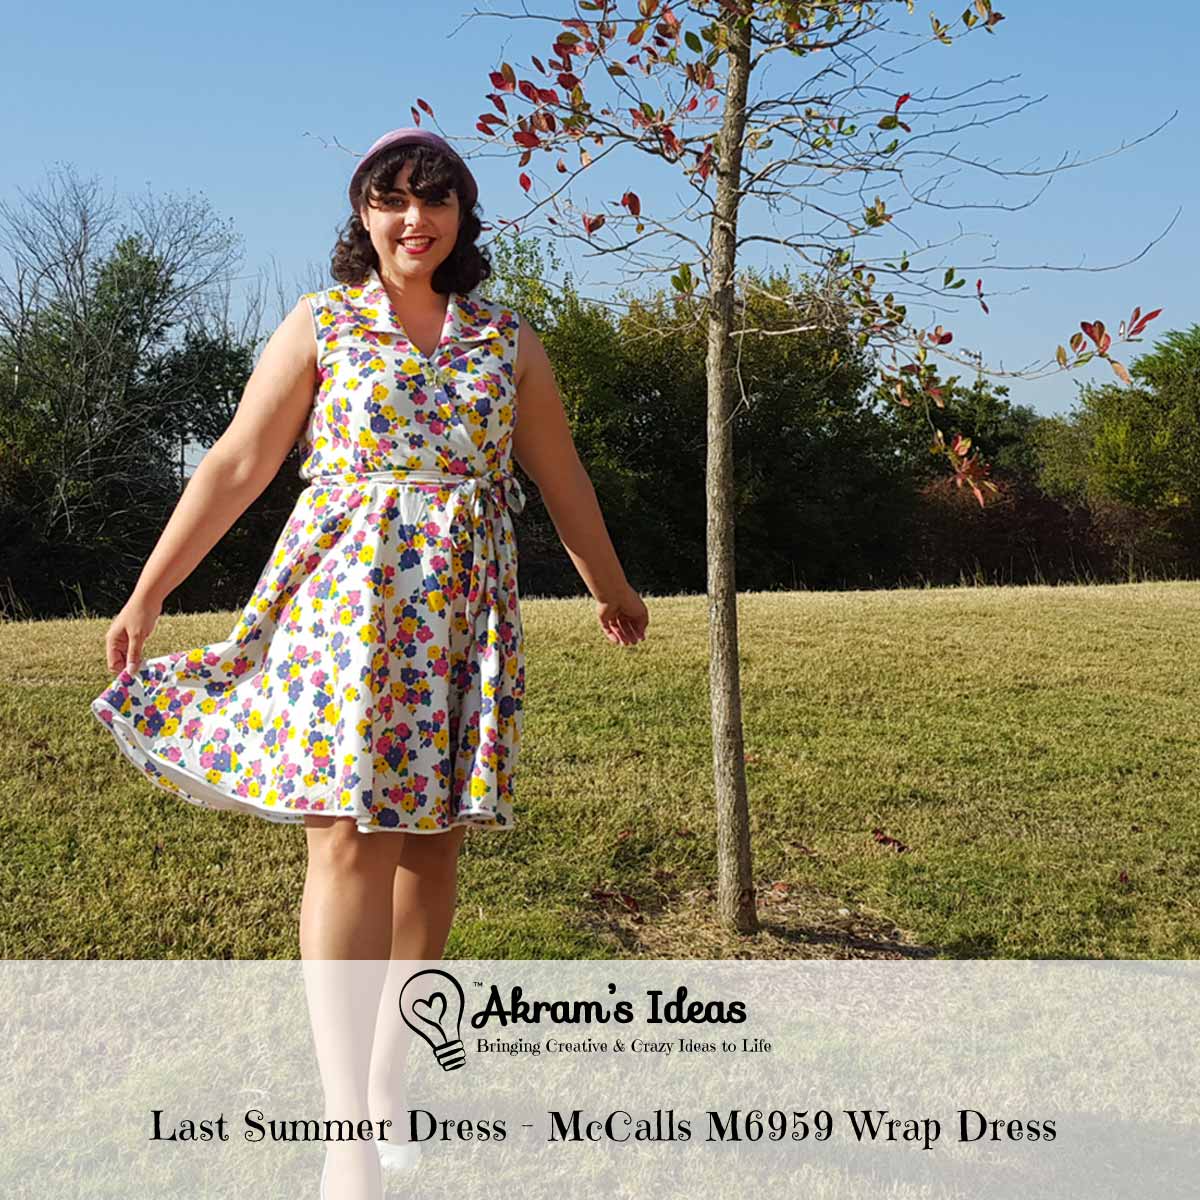 Akram's Ideas : Last Summer Dress - McCalls M6959 Wrap Dress